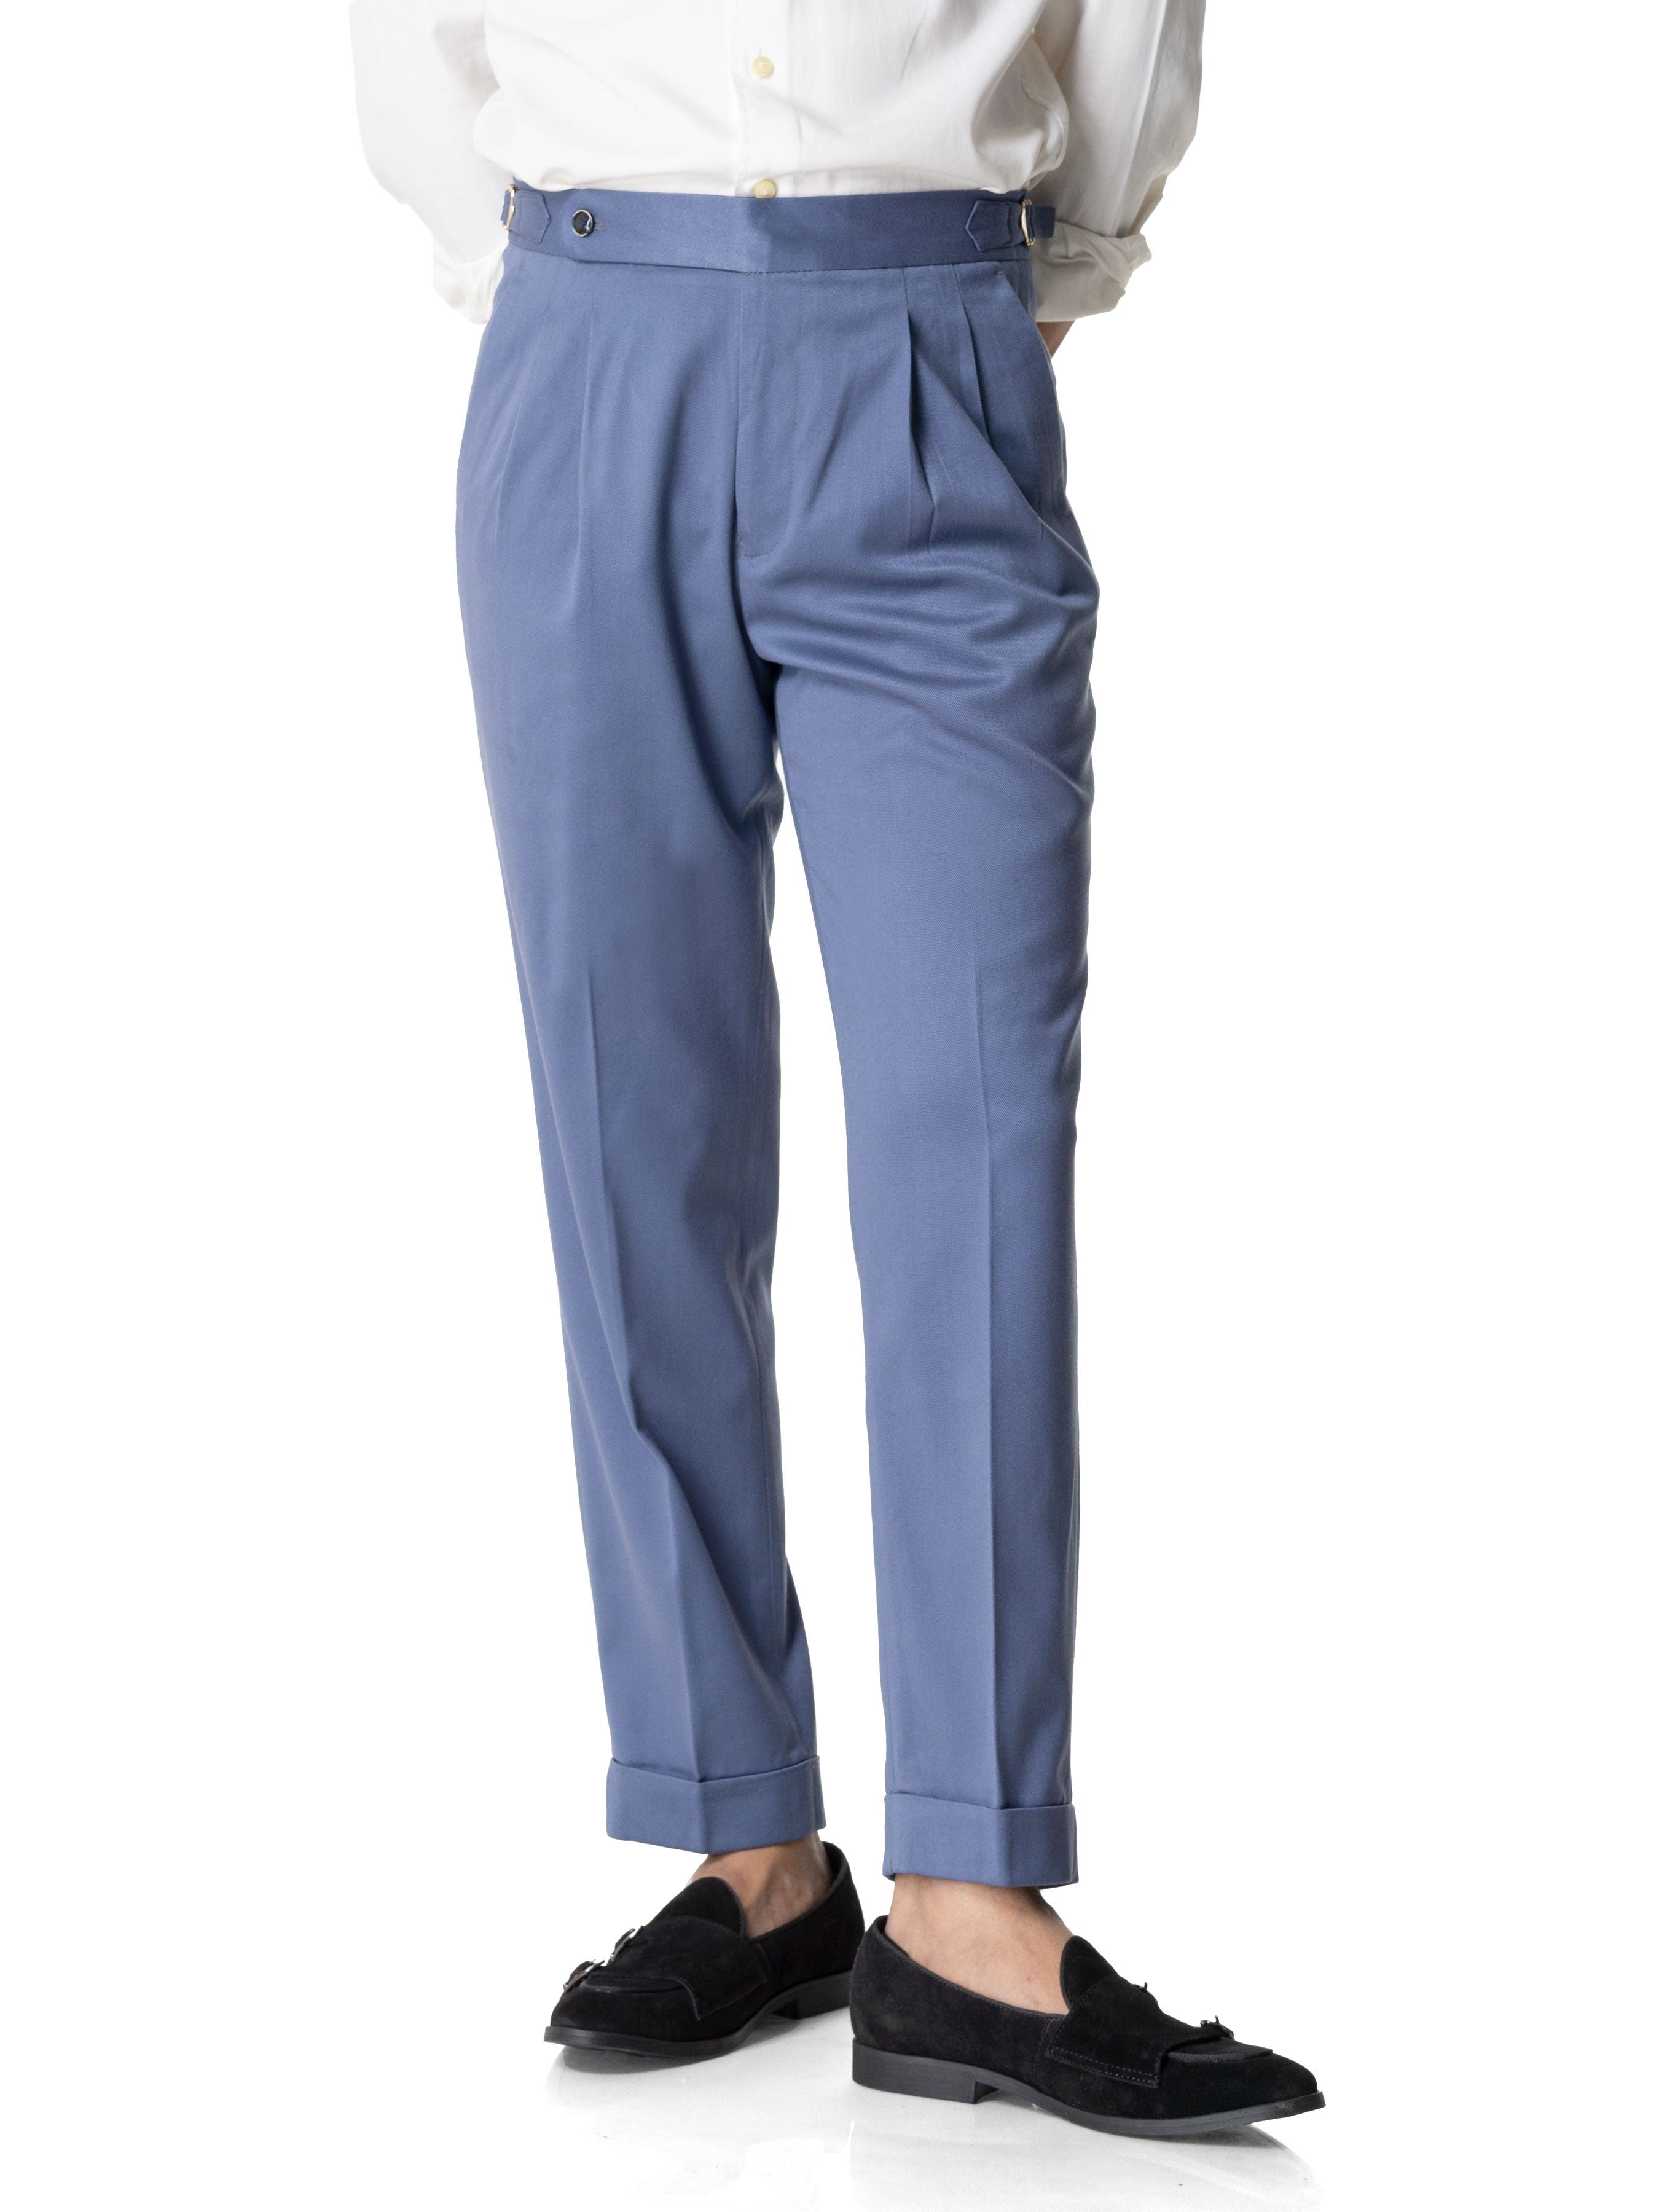 Buy Men Work Pants Cotton Gurkha Trouser Regular Fit Double Online in India   Etsy